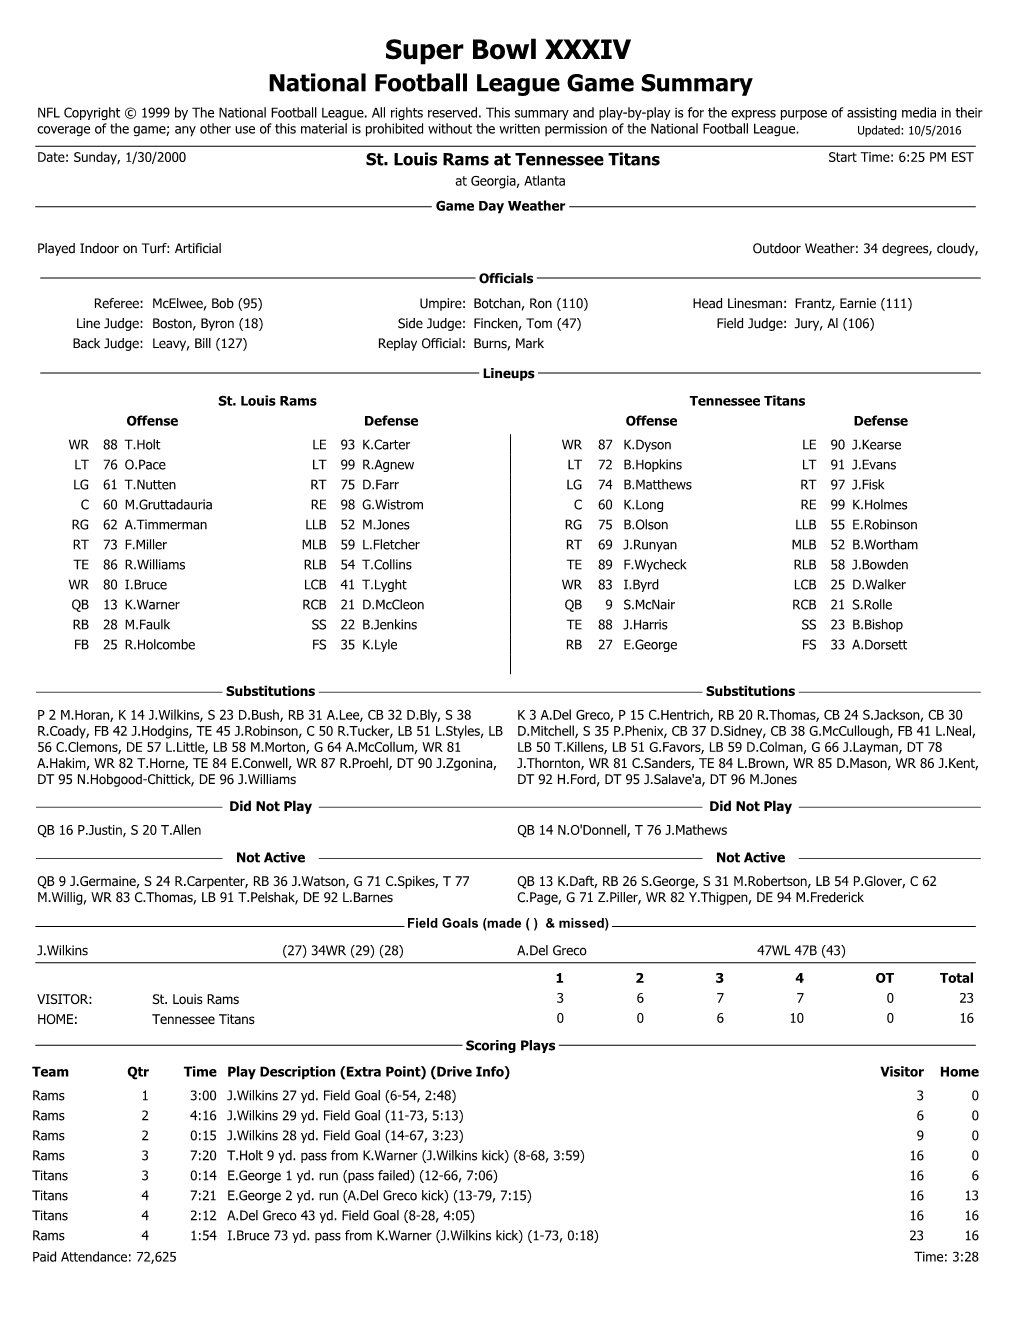 Super Bowl XXXIV National Football League Game Summary NFL Copyright © 1999 by the National Football League